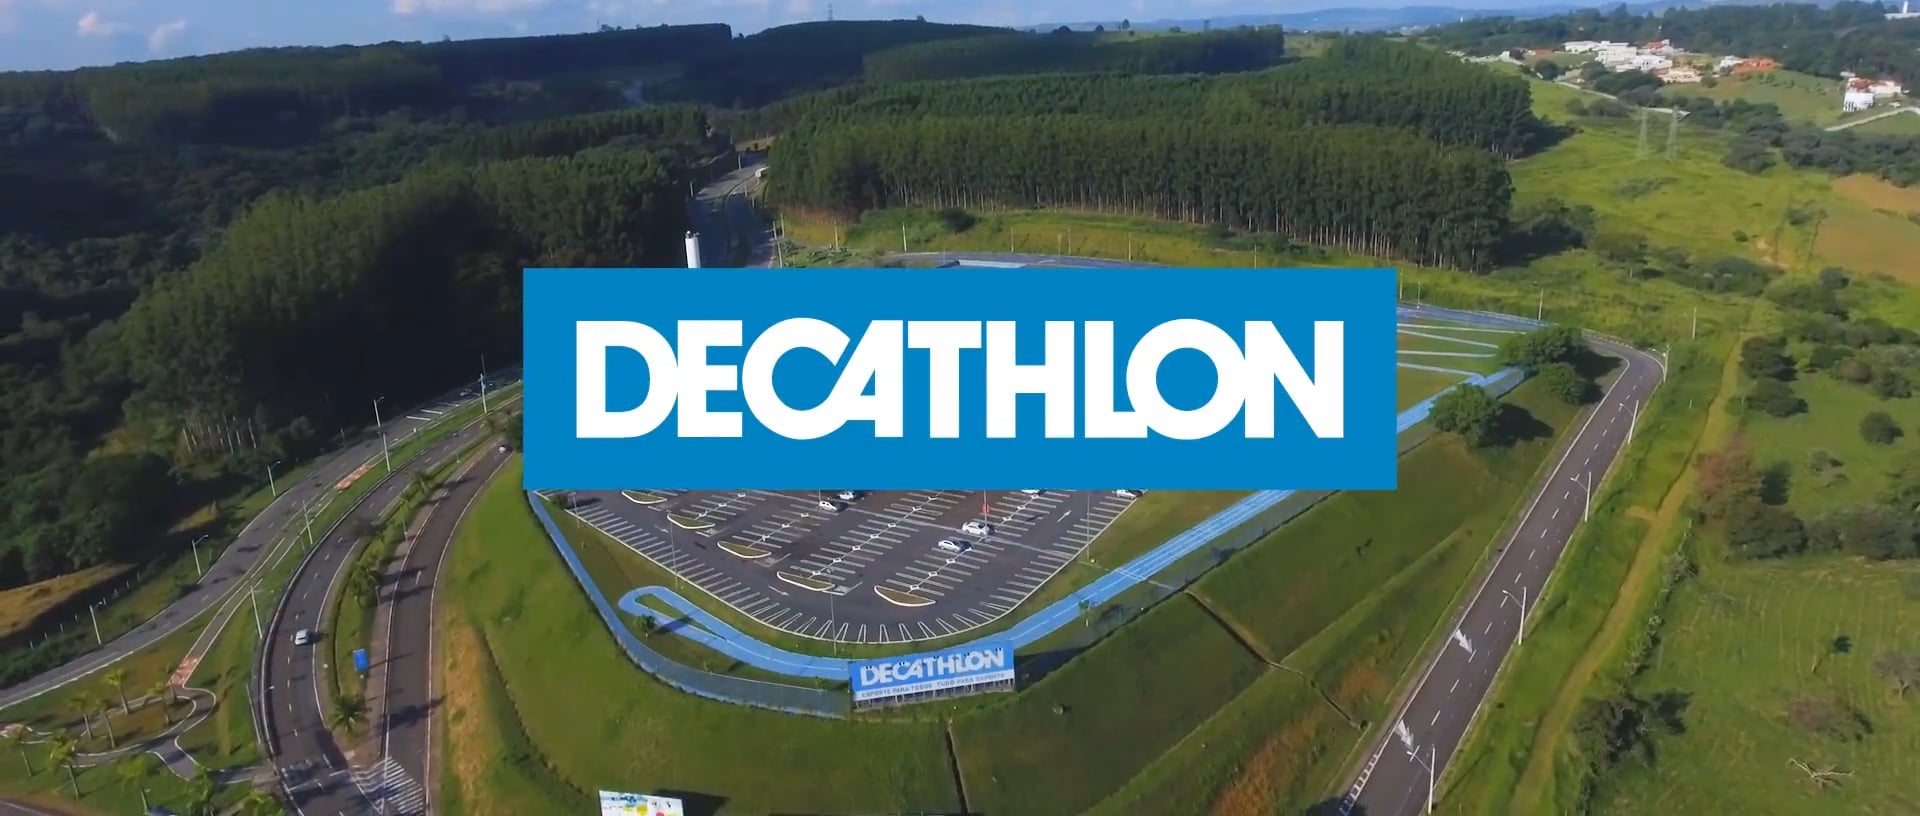 Decathlon Campinas - Revitalização Loja on Vimeo